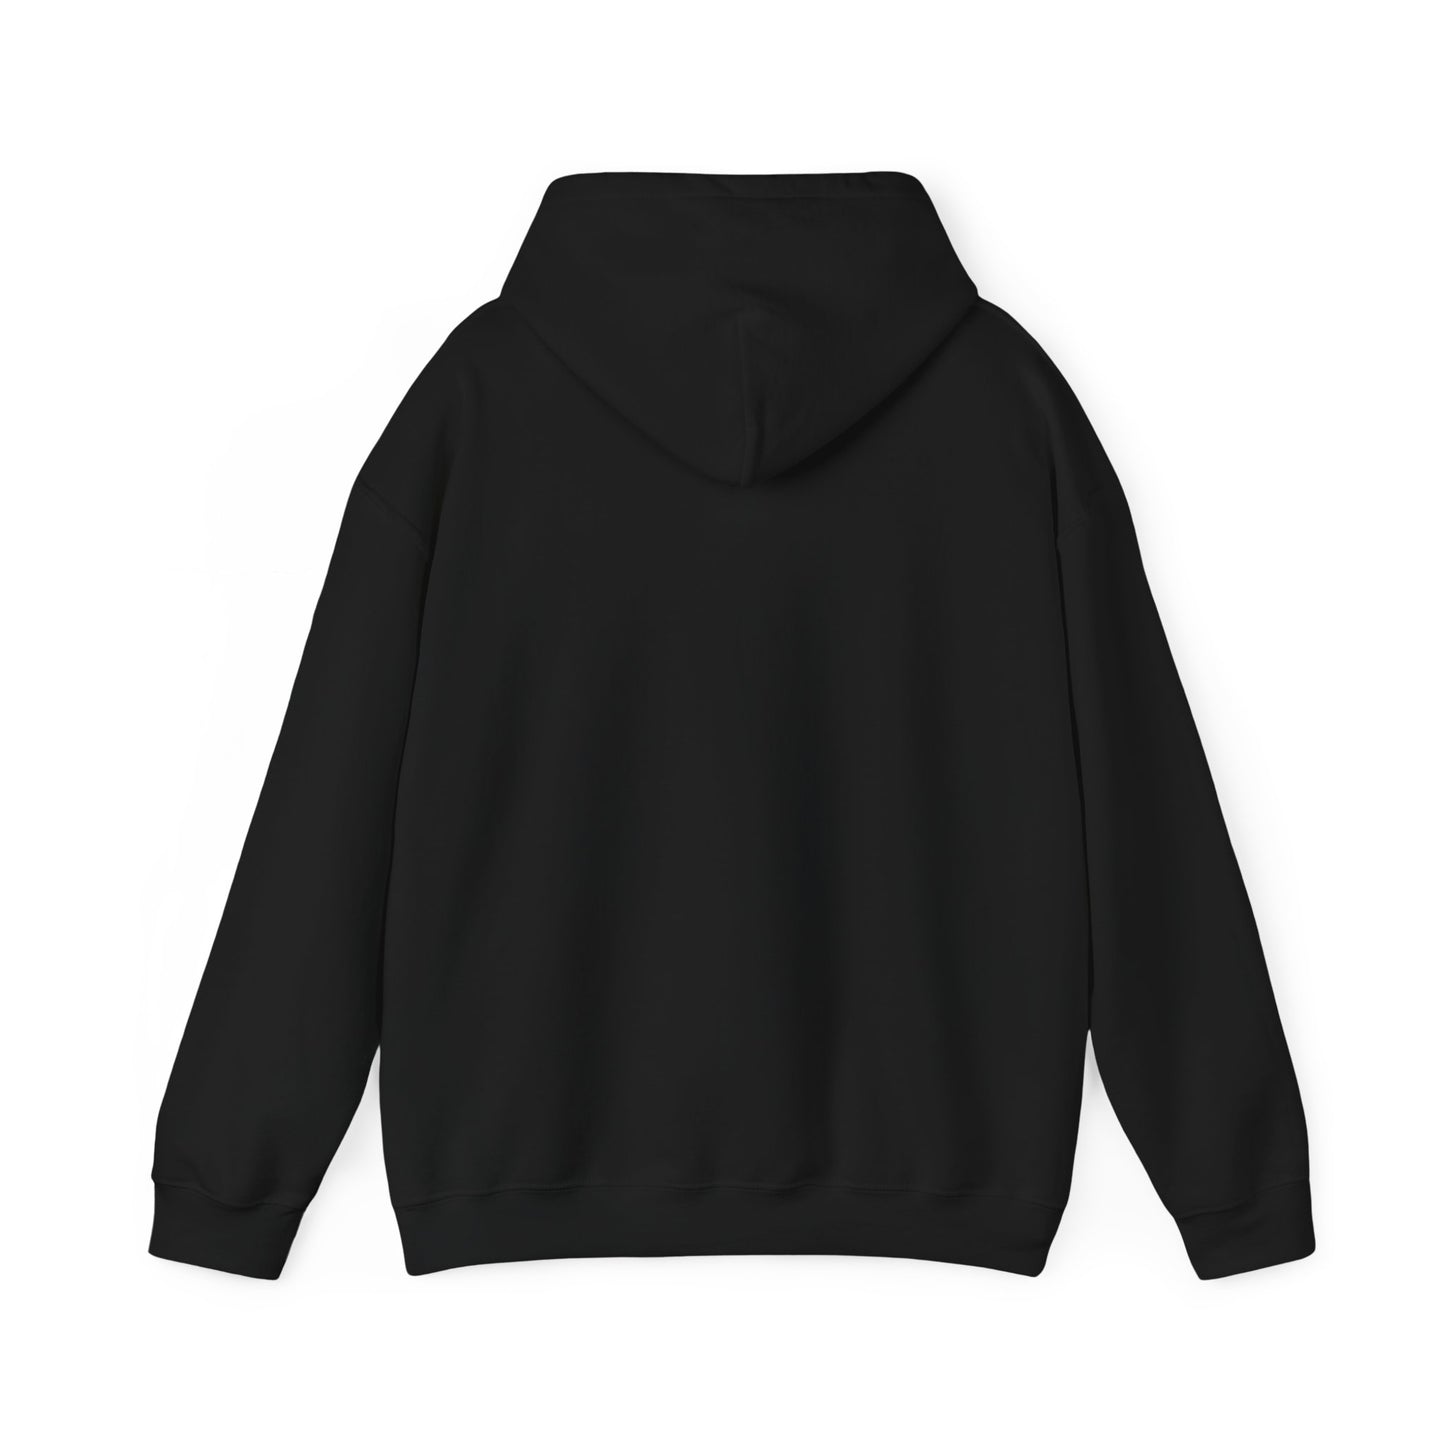 Las Nibiru: Unisex Heavy Blend Hooded Graphic Sweatshirt